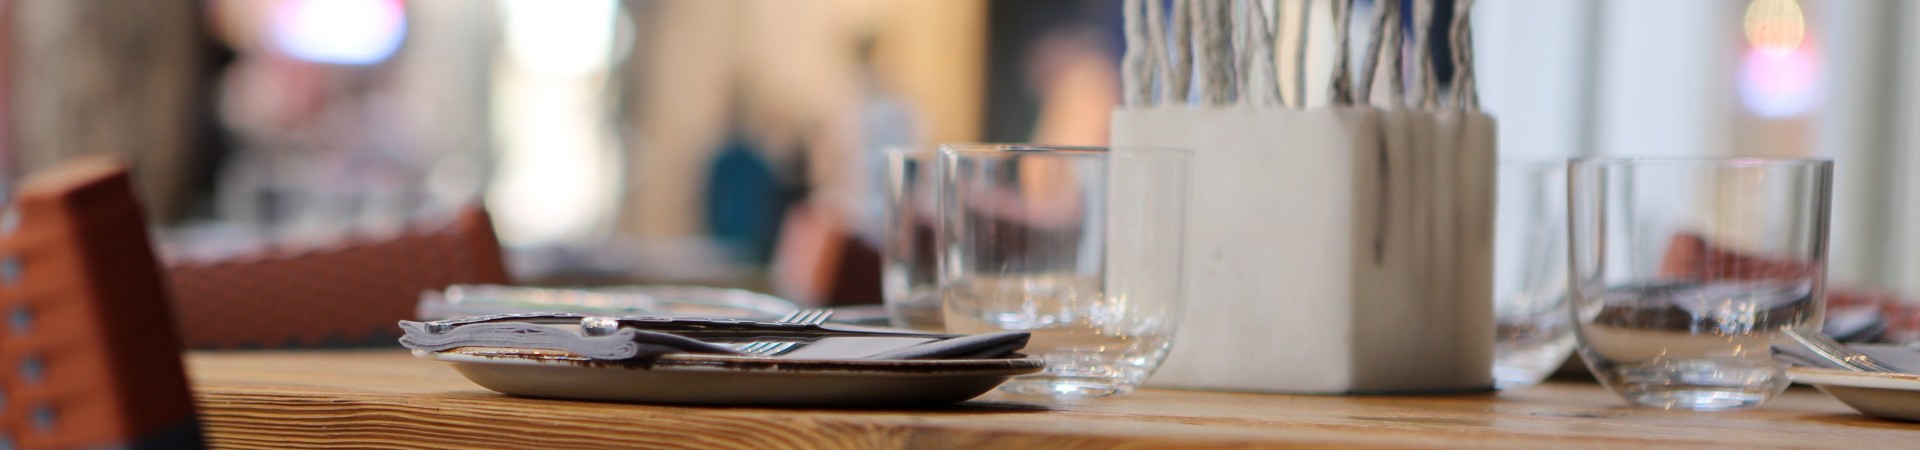 Bord op gedekte tafel in restaurant - restaurantblog